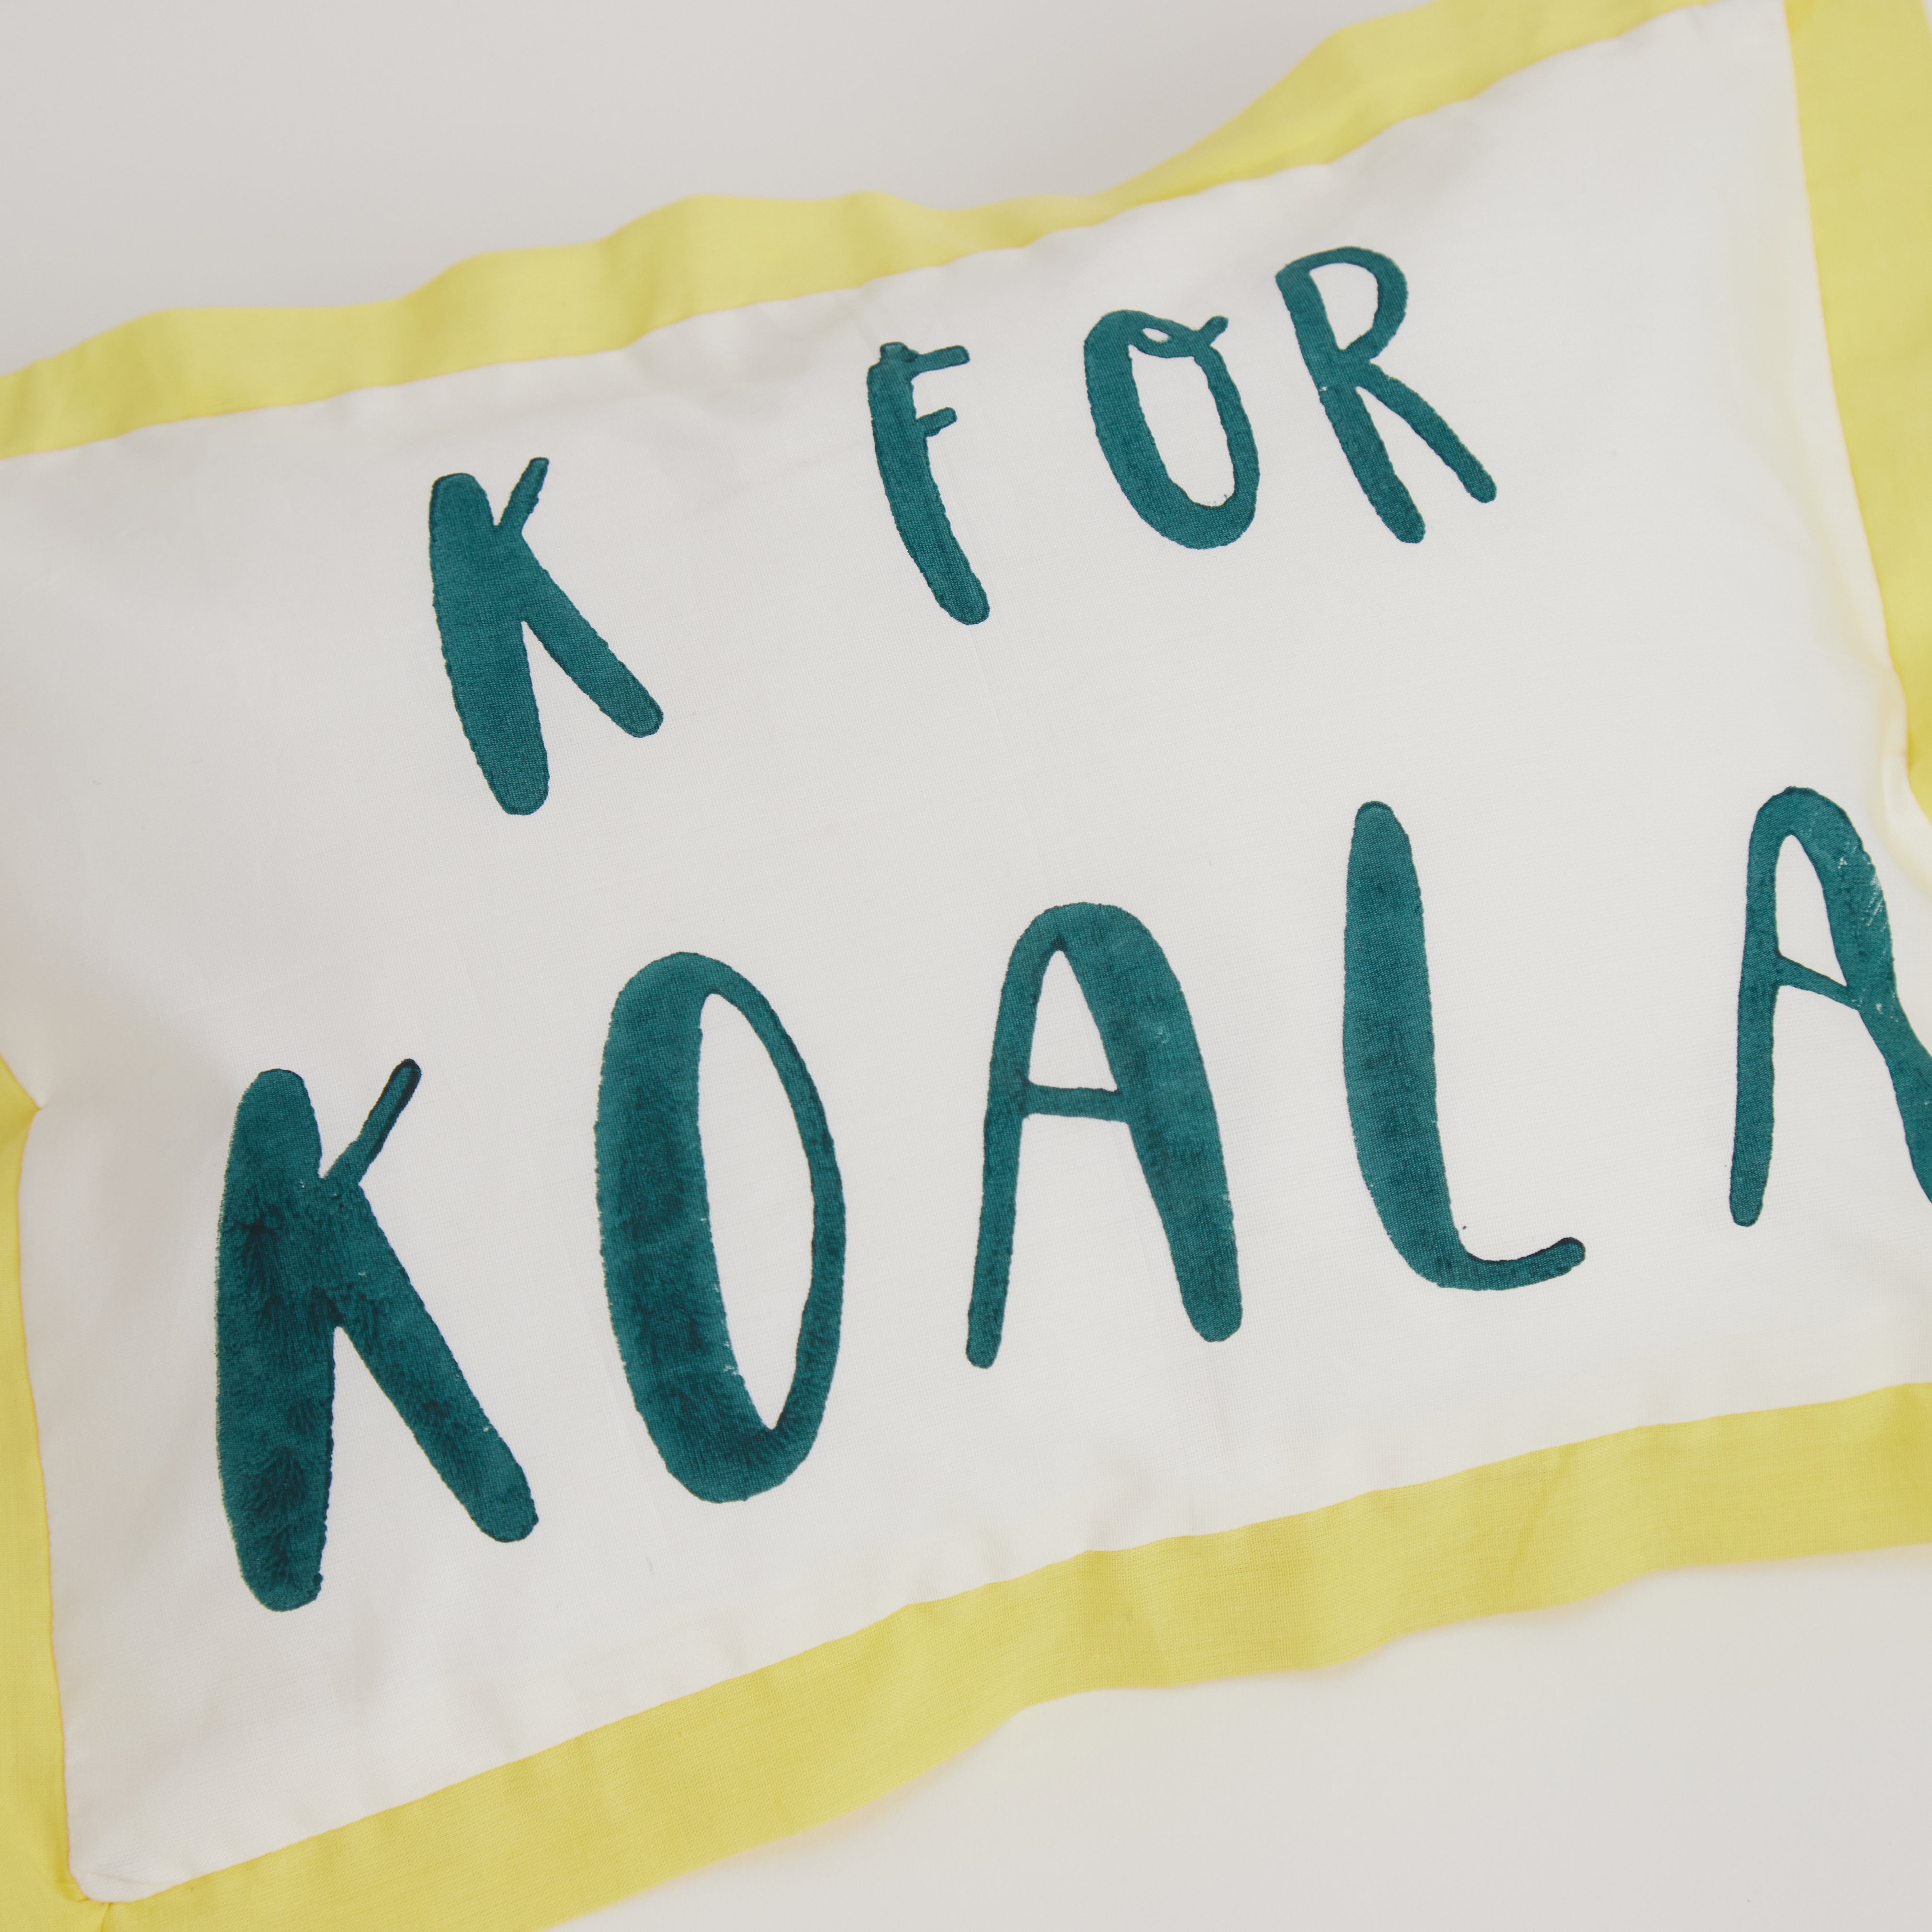 Masaya Pillow And Bolster Set- K For Koala- Yellow